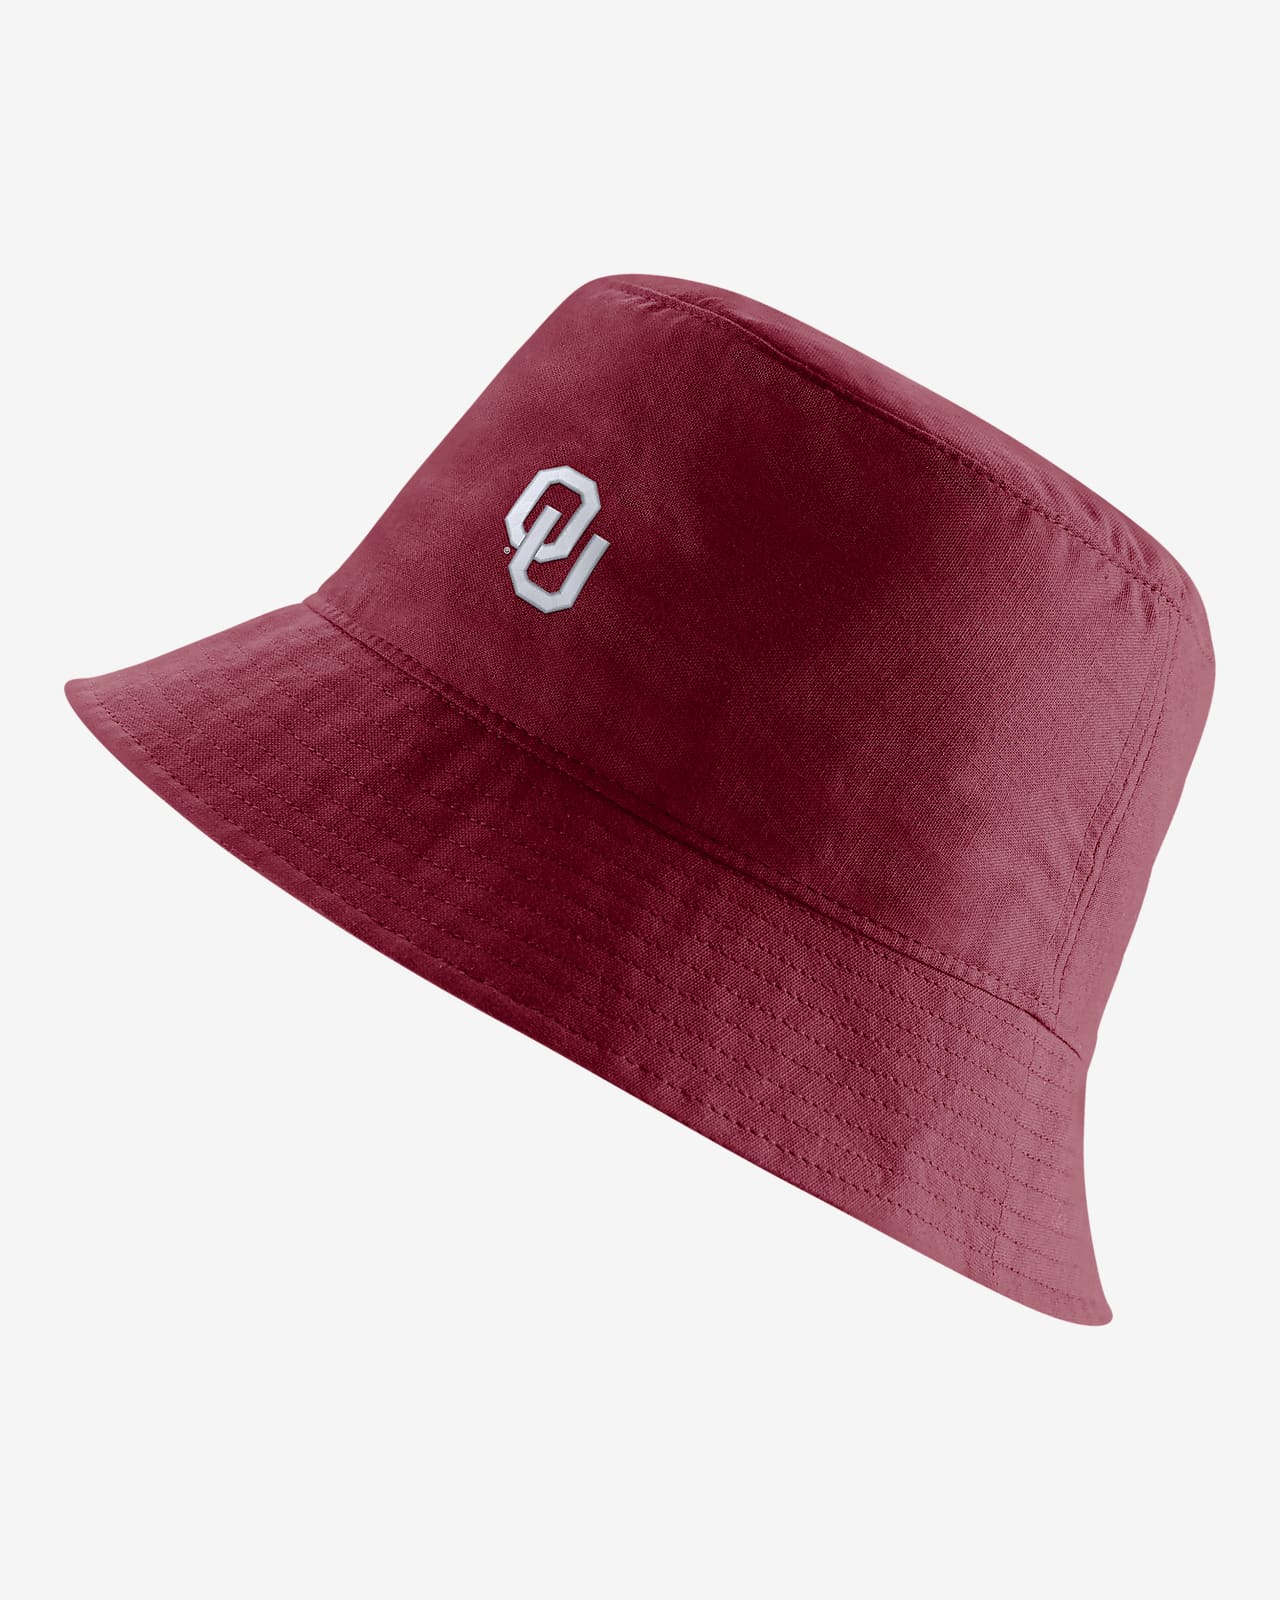 Oklahoma Nike College Bucket Hat